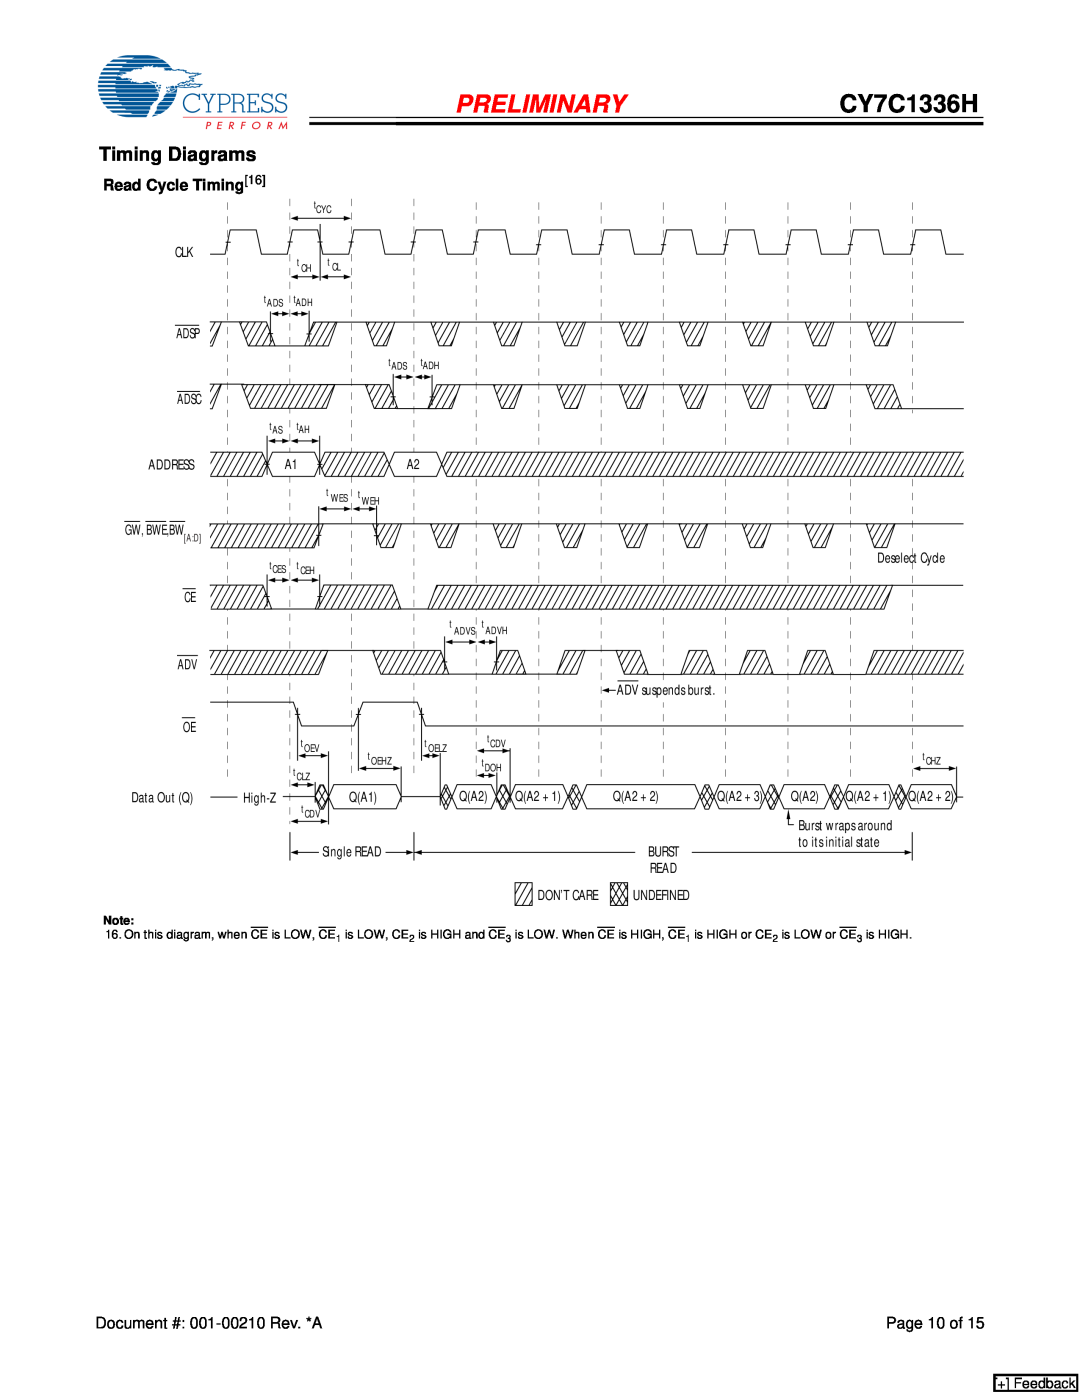 Cypress manual Timing Diagrams, PRELIMINARYCY7C1336H, Read Cycle Timing16, + Feedback 